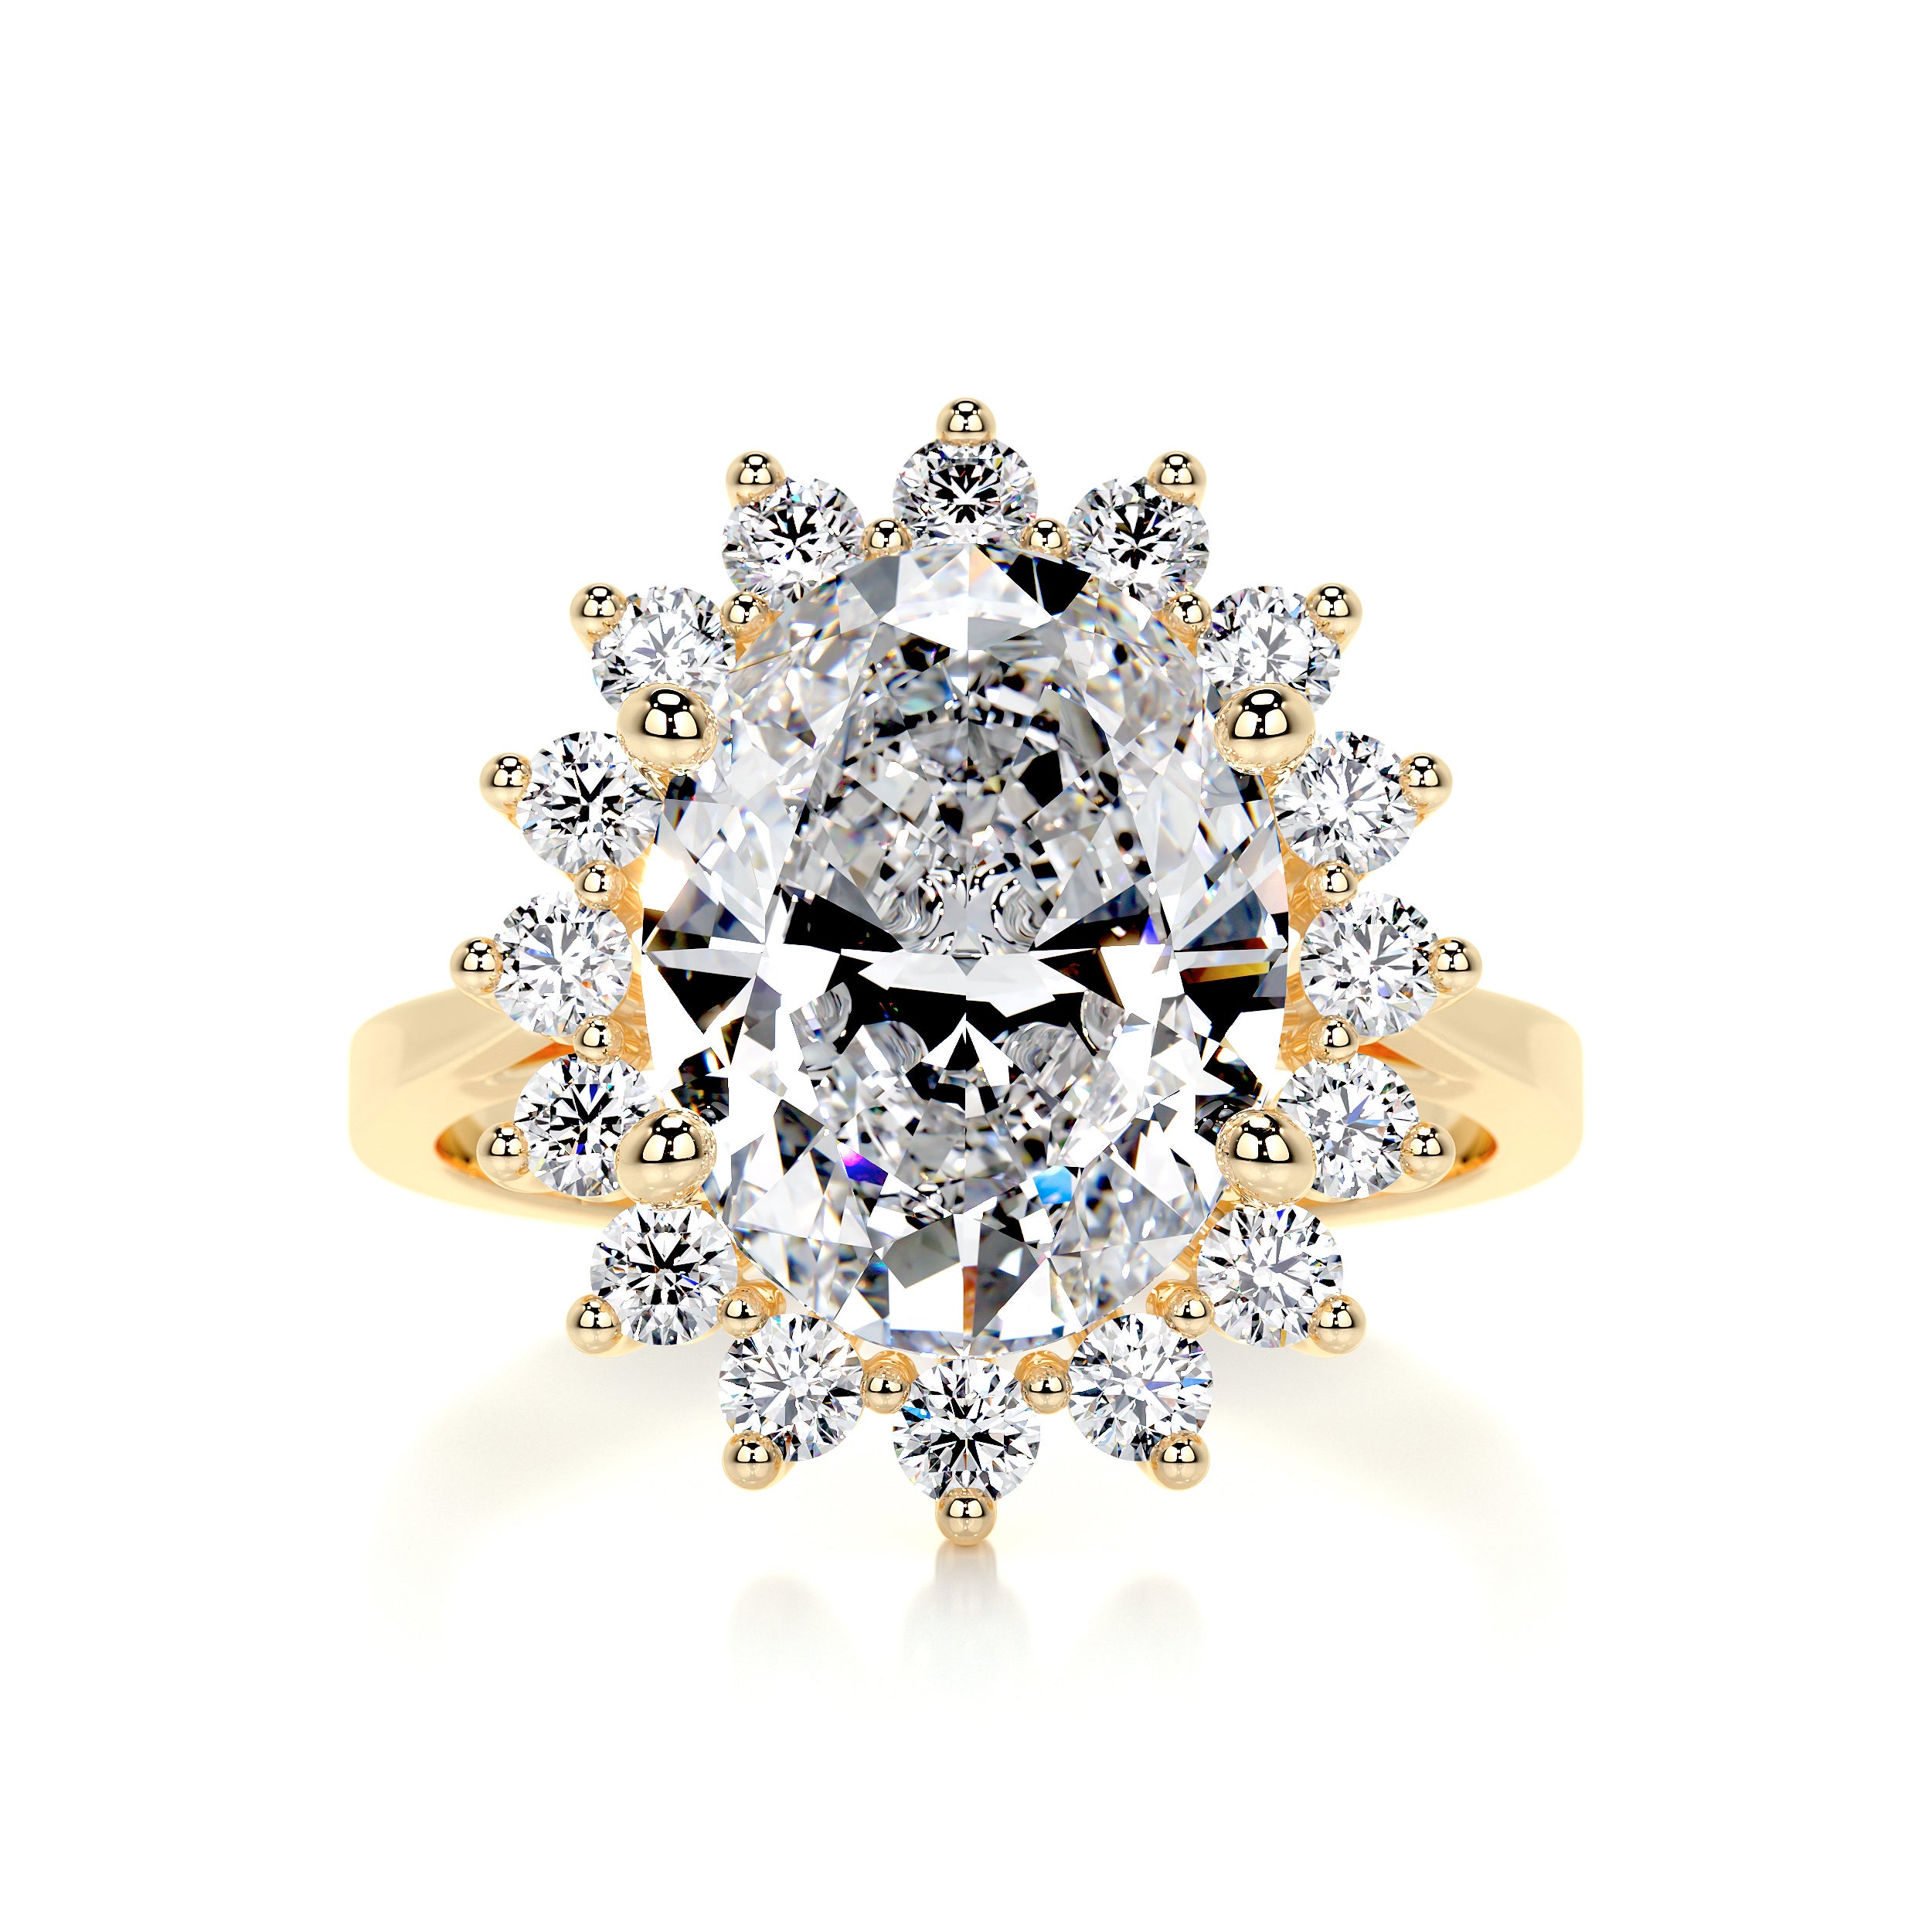 Lyn Diamond Engagement Ring - 18K Yellow Gold